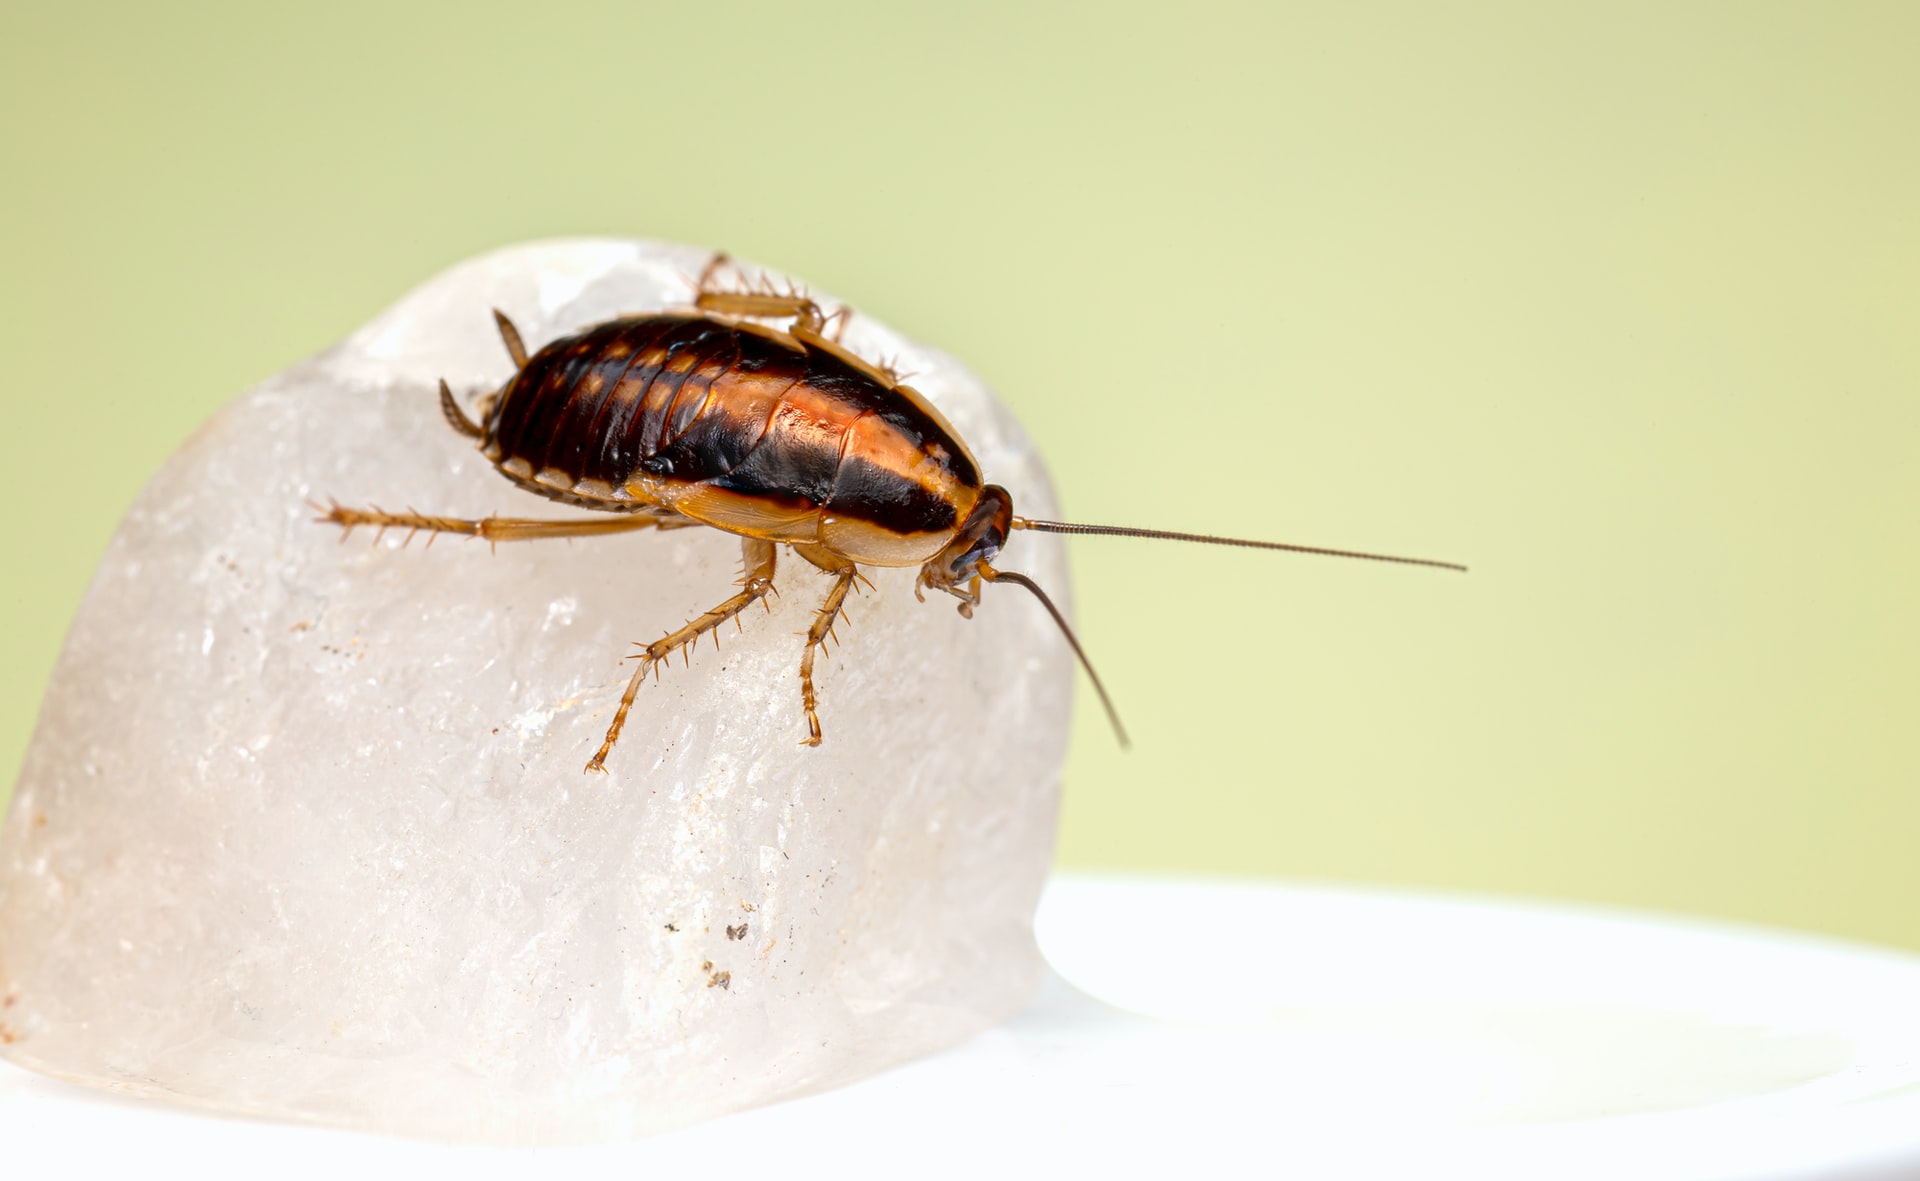 Cockroach Infestation